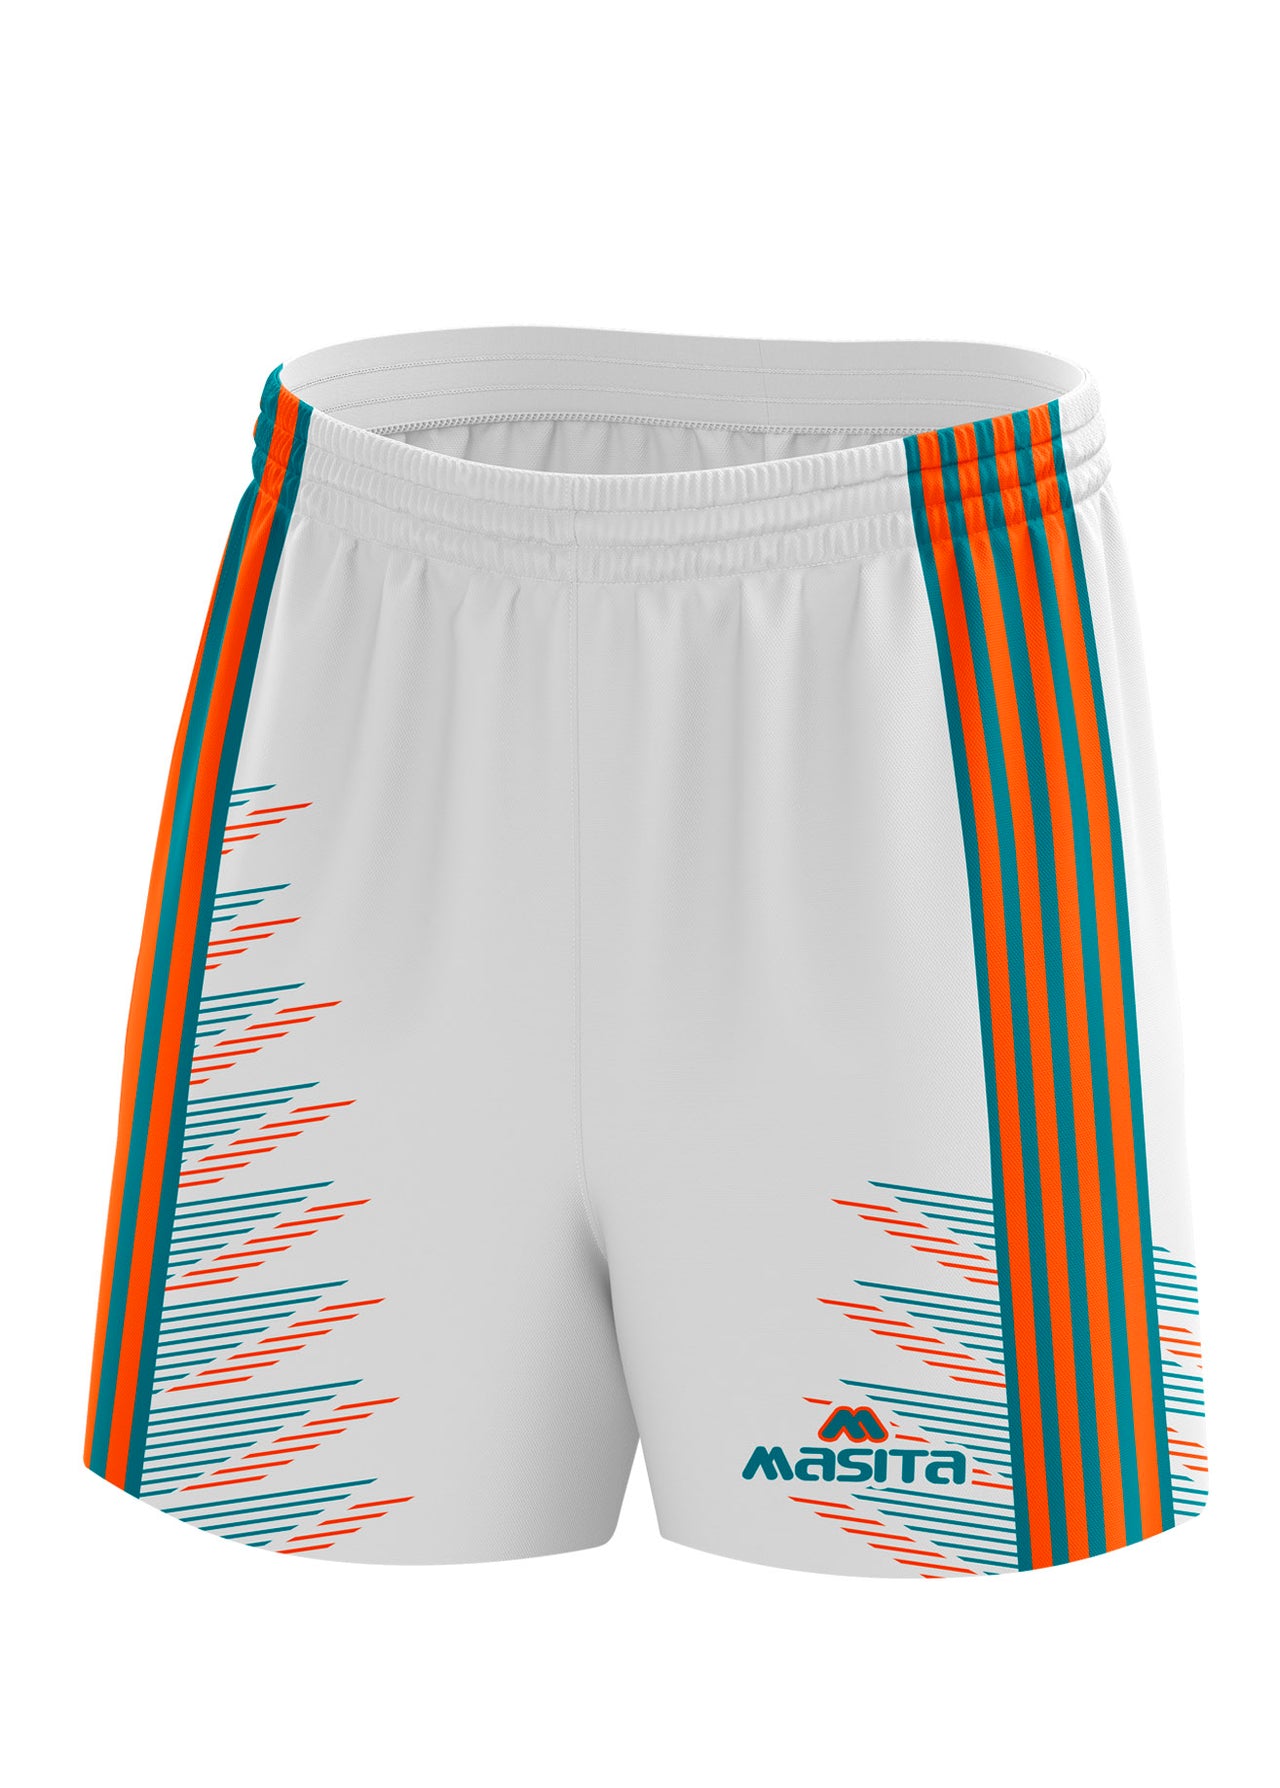 Hydro Gaelic Shorts White/Orange/Ocean Green Adult